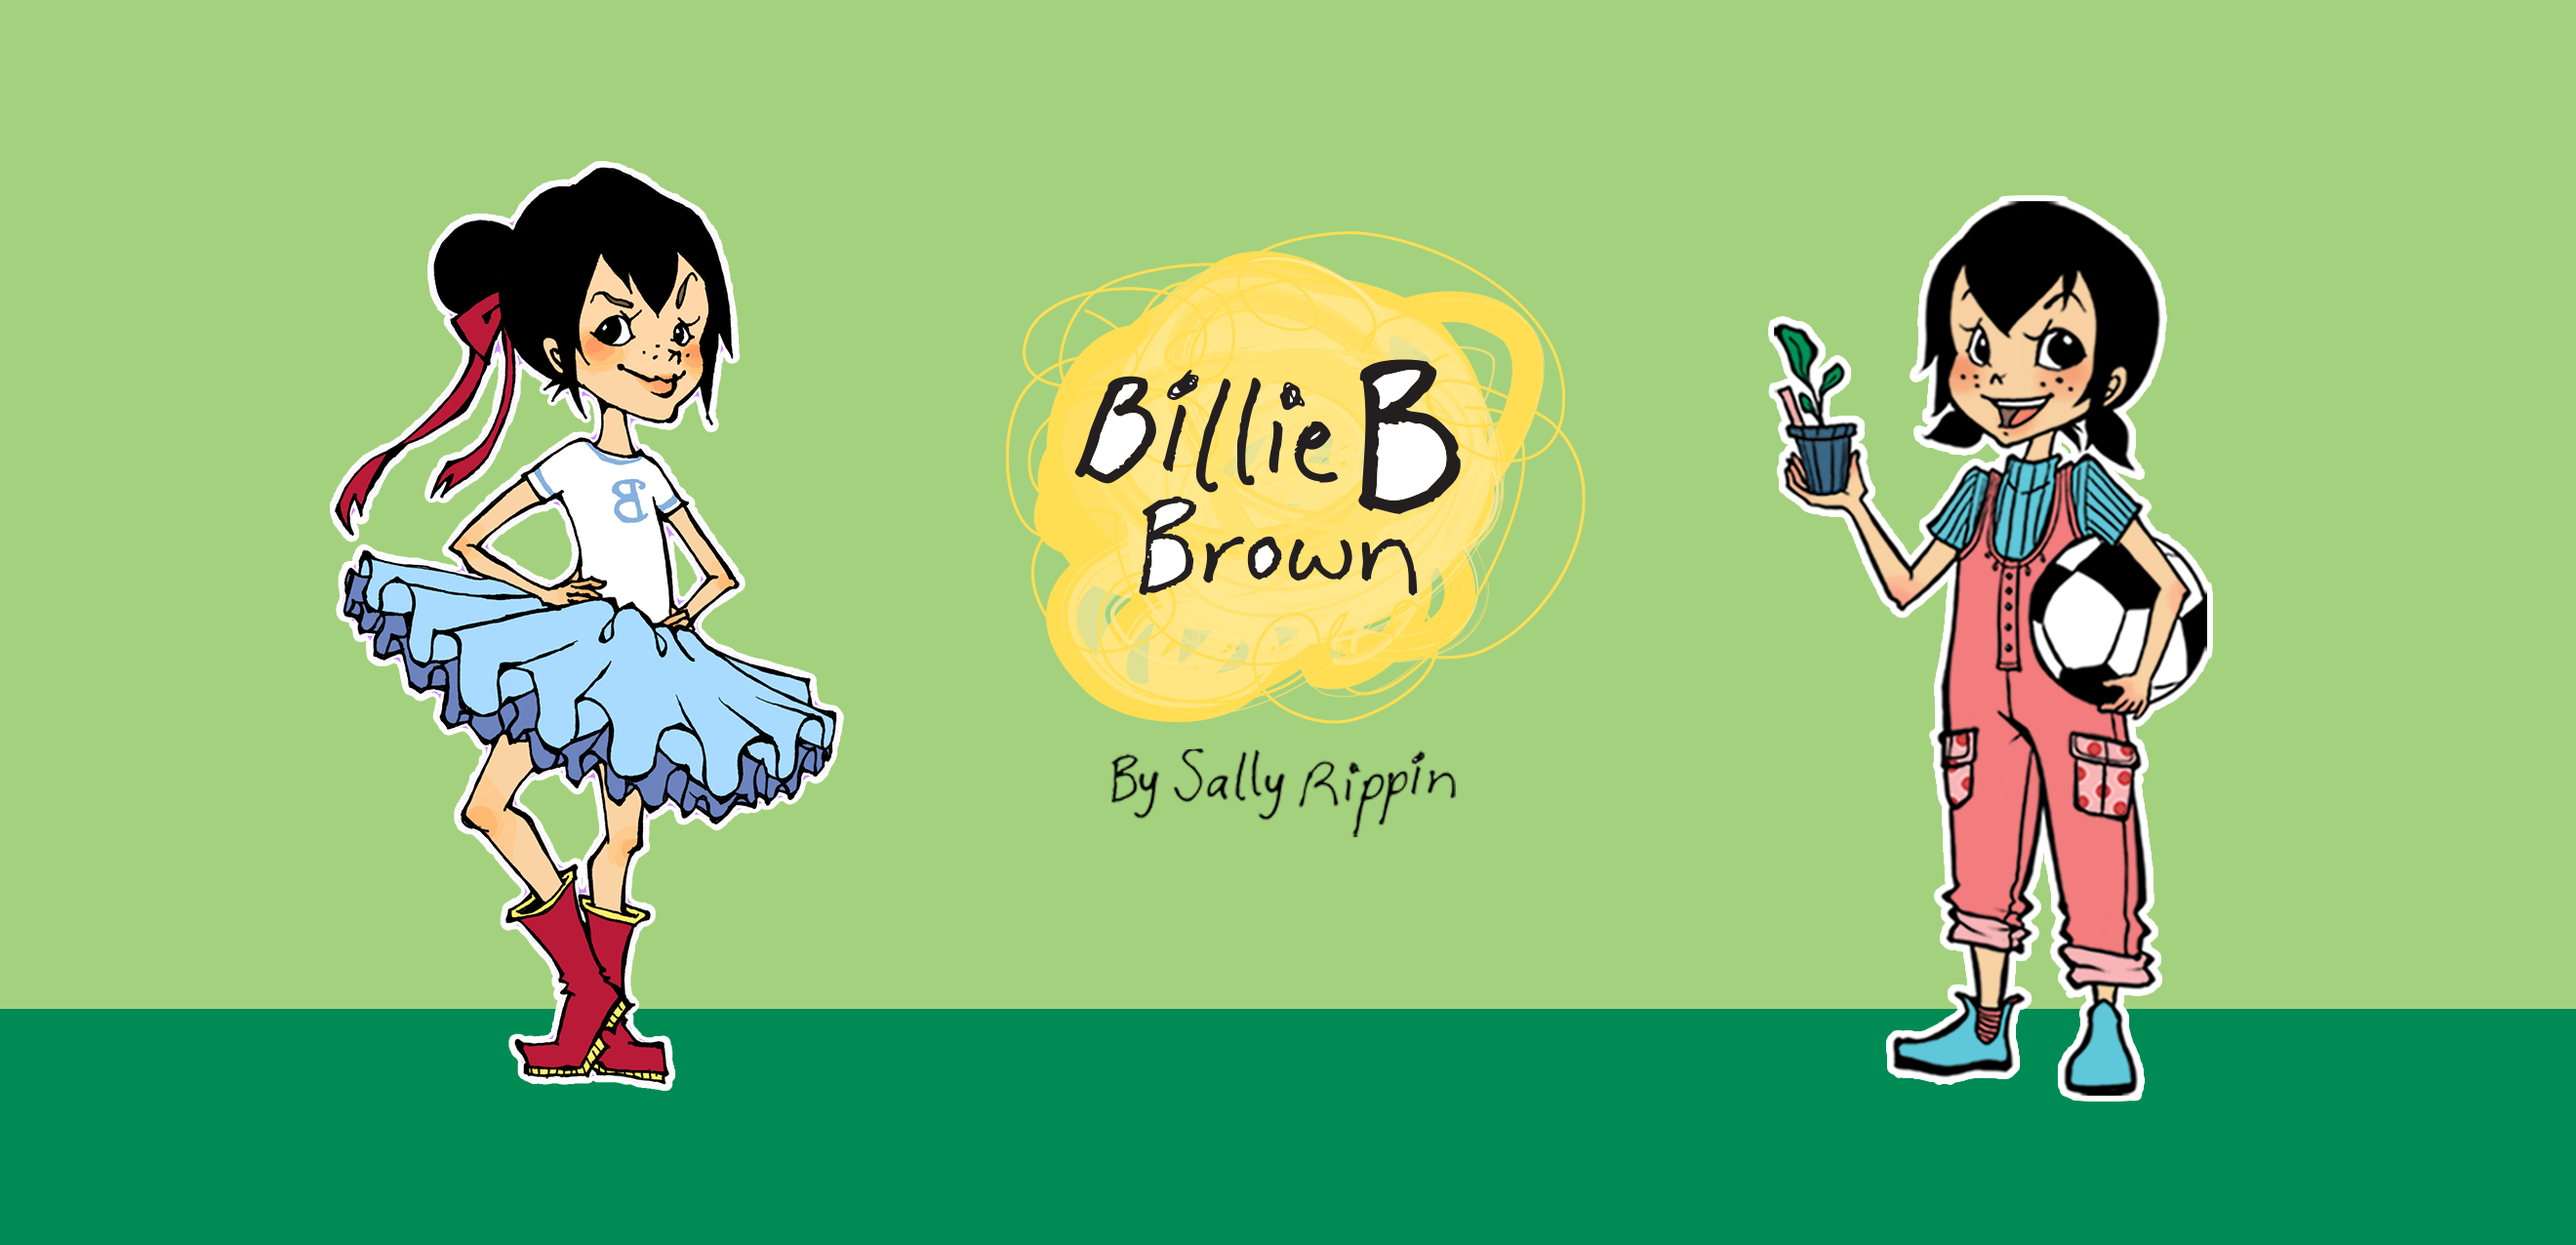 Billie B Brown turns 10!